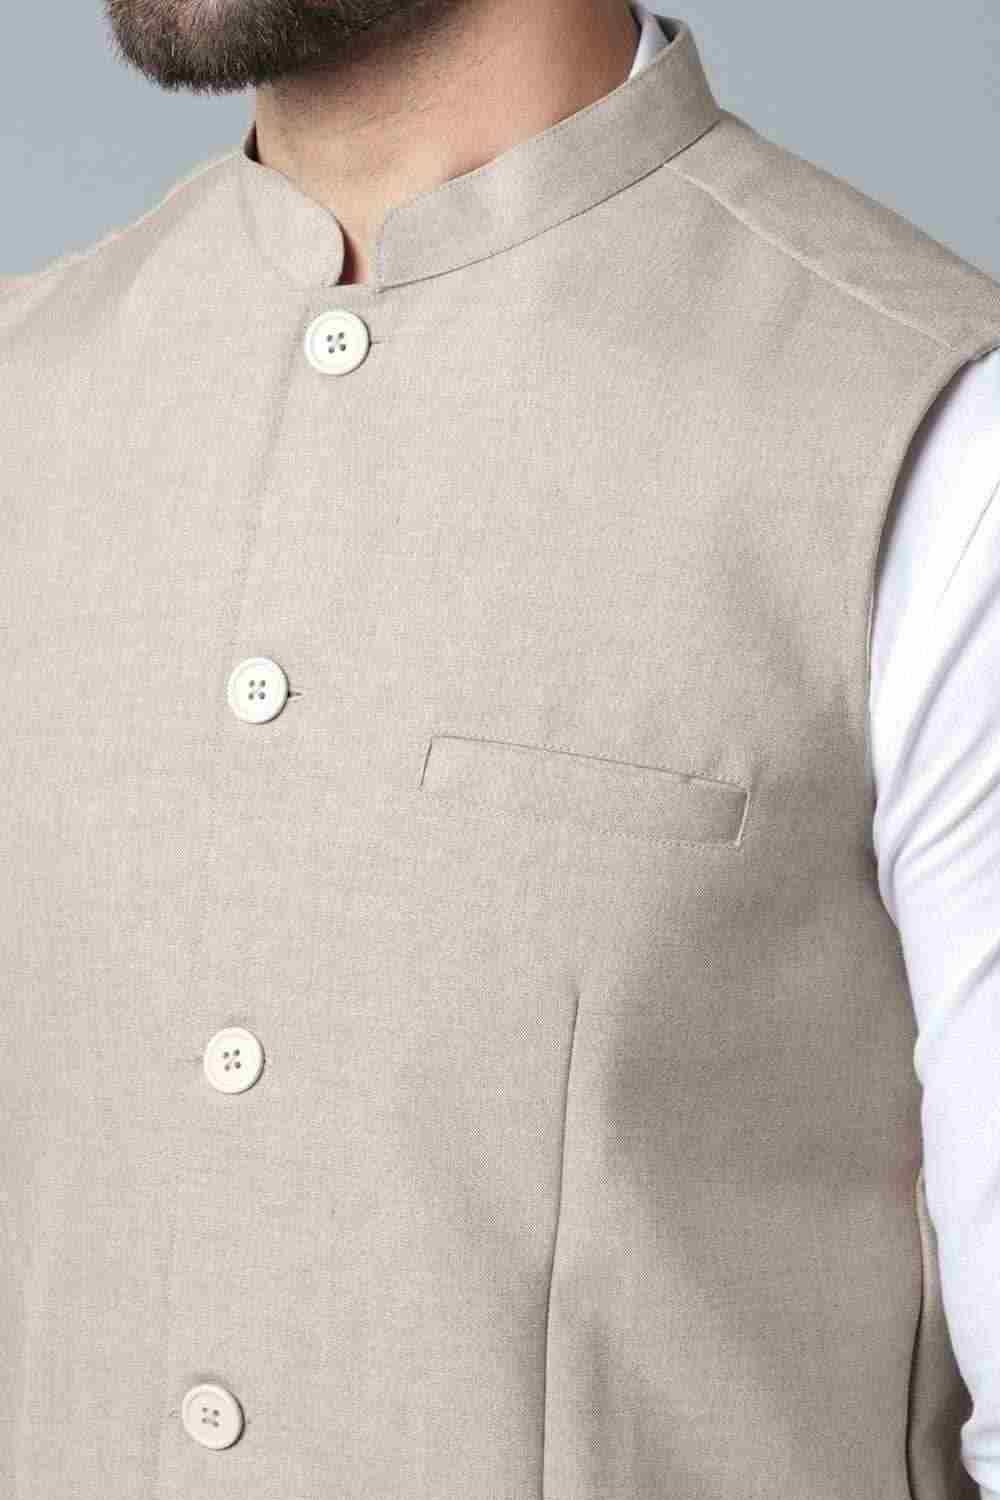 Buy Men's Cream Cotton Solid Waistcoat Online - KARMAPLACE